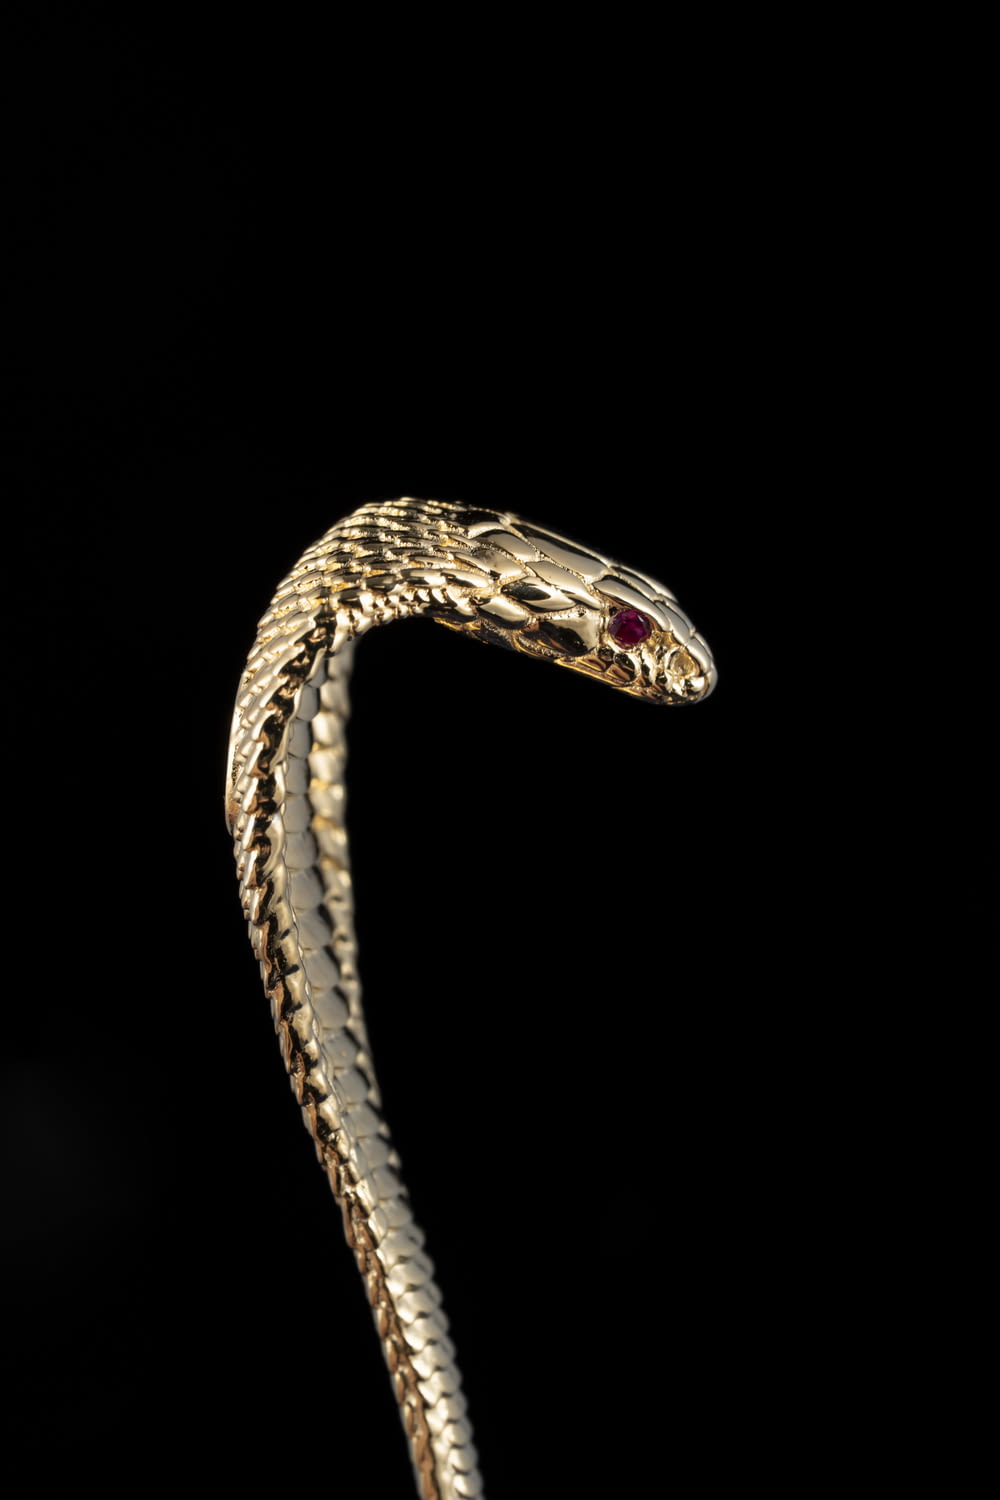 a close up of a snake on a black background